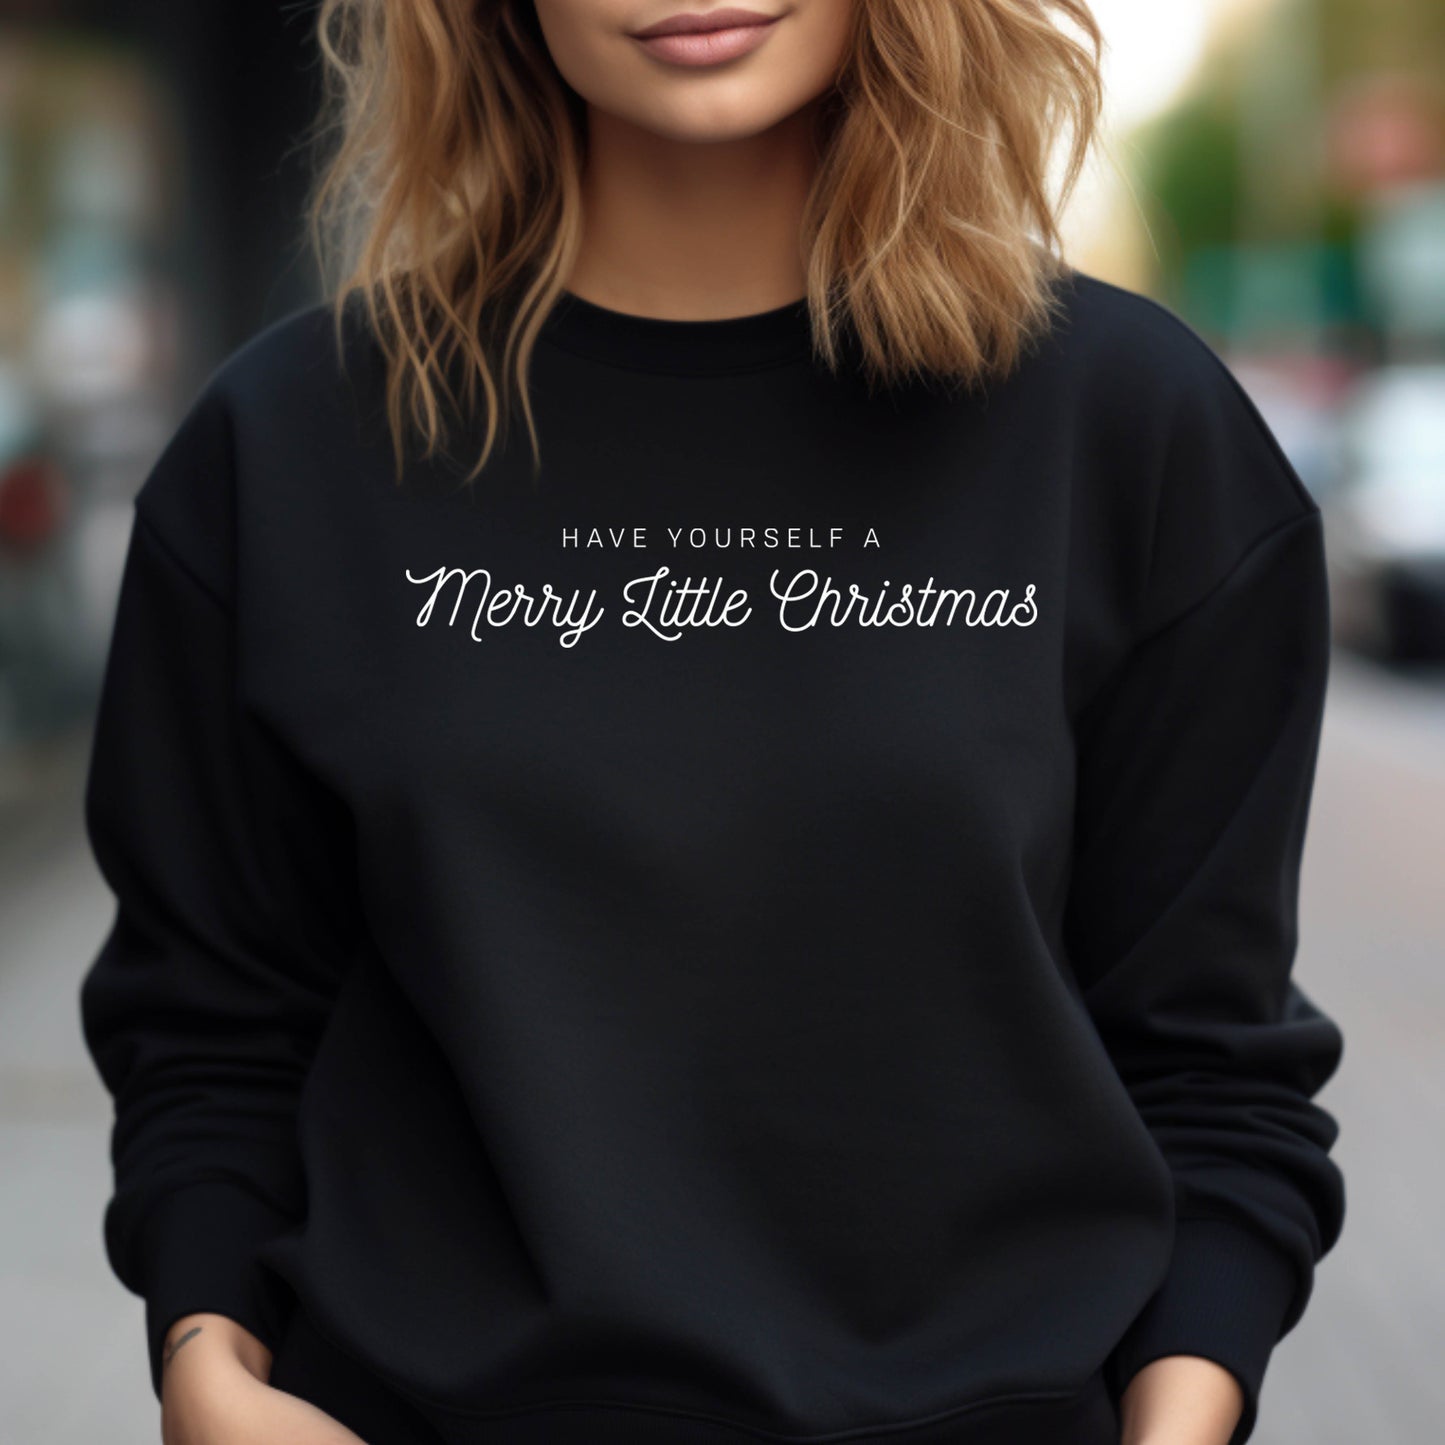 Merry Little Christmas Sweatshirt- Black (Adult Only)